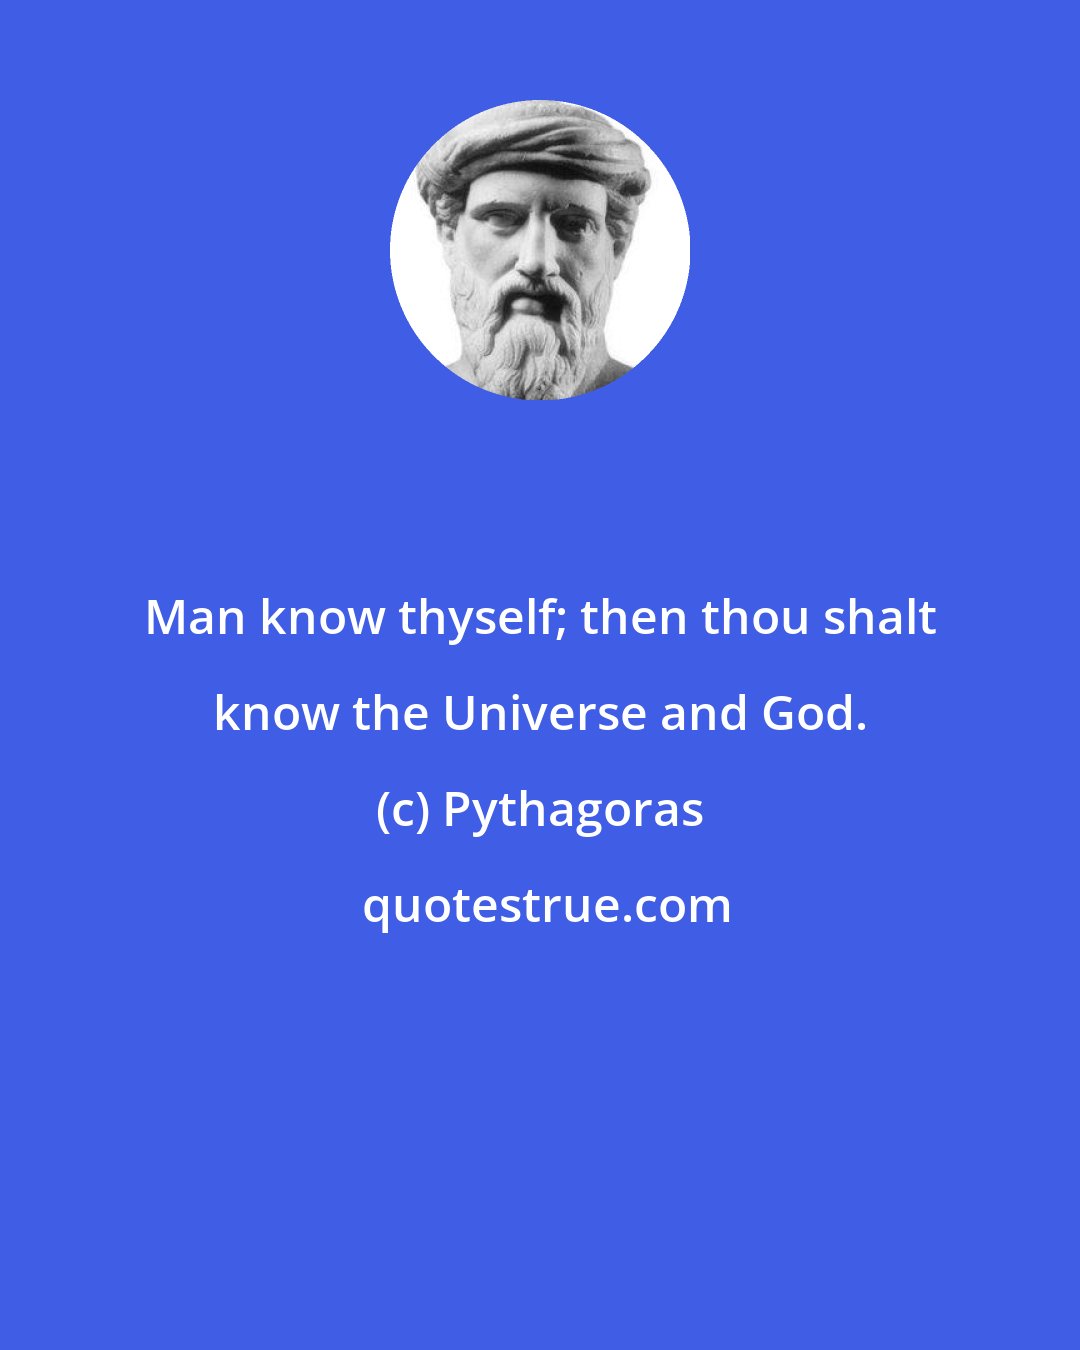 Pythagoras: Man know thyself; then thou shalt know the Universe and God.